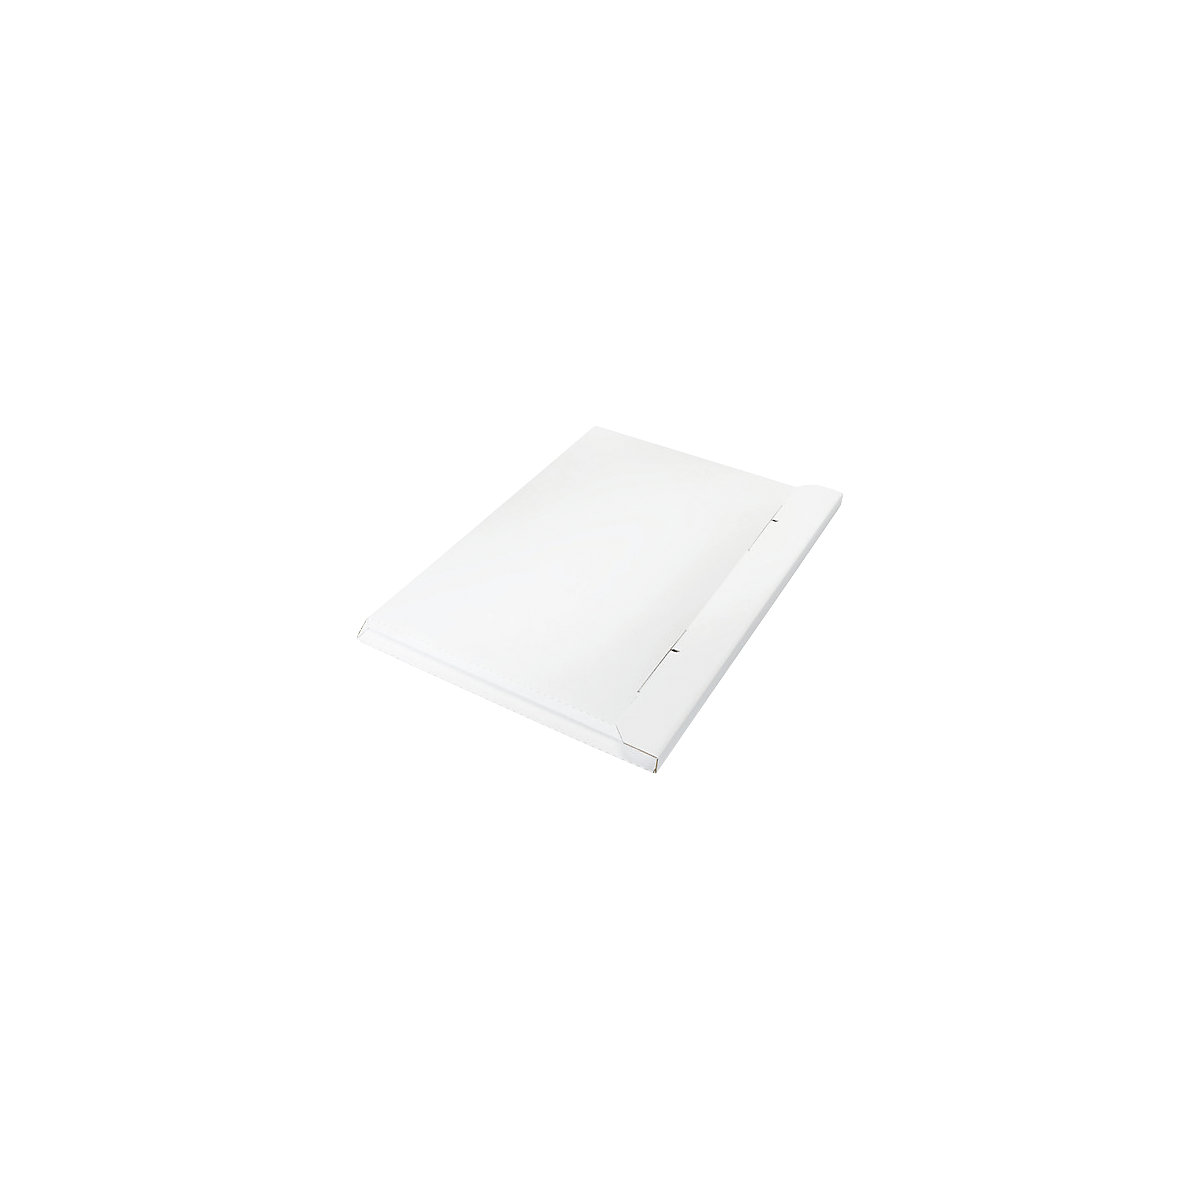 Flach-/Kalender-Pack, 1-wellig, Innen-LxBxH 570 x 395 x 10 mm, weiß, ab 100 Stk-3